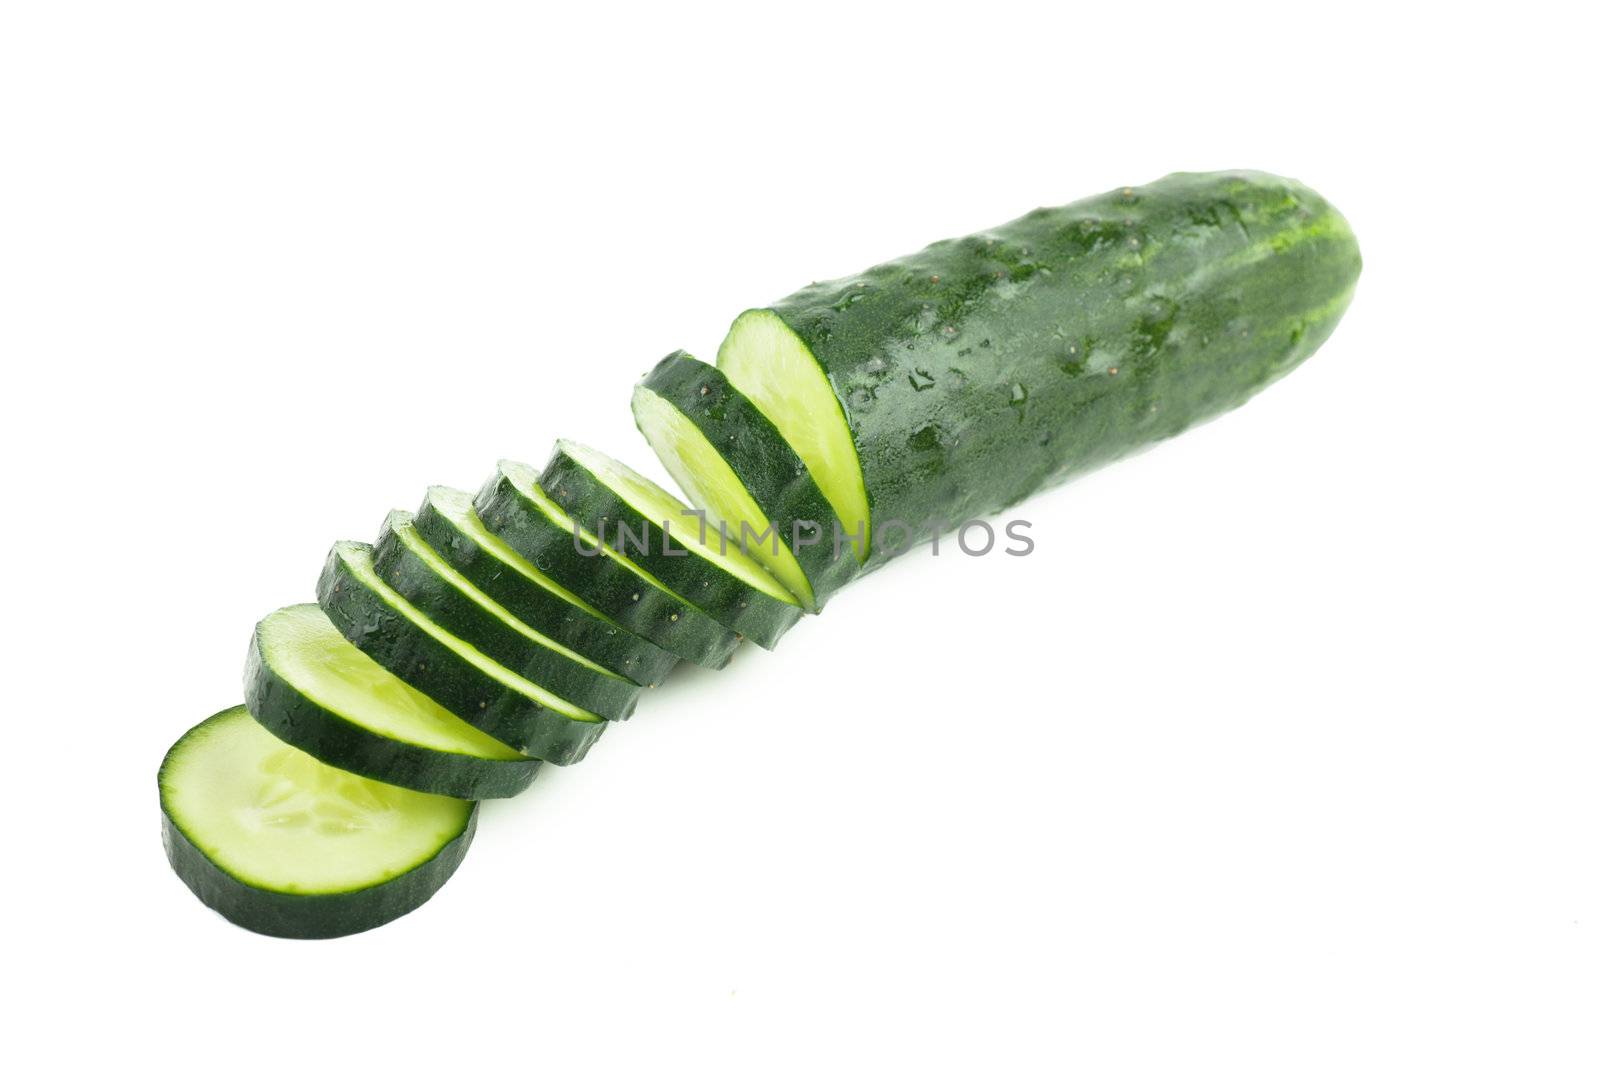 Macro view of cucumber slices